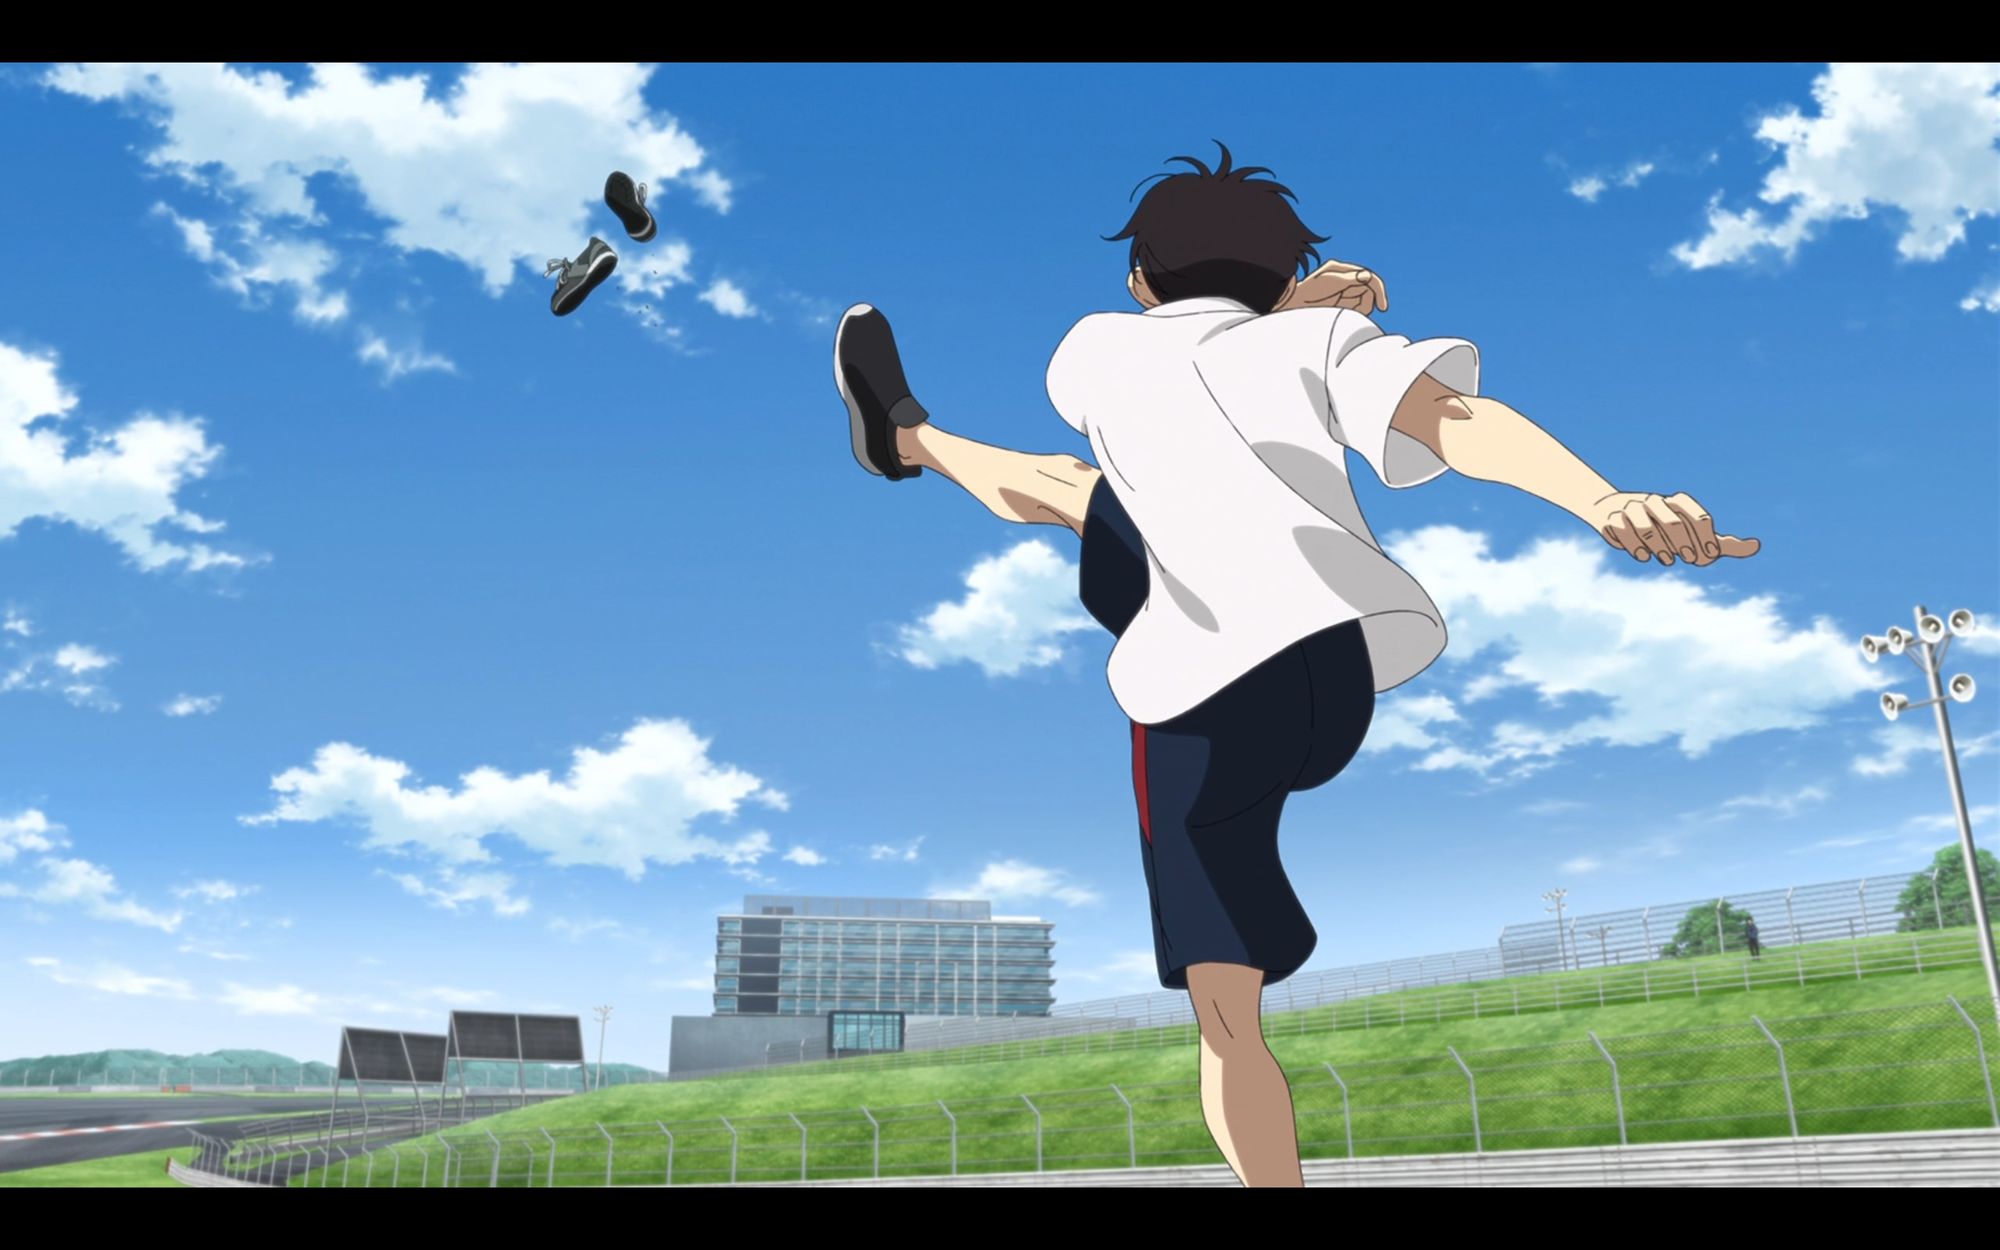 haruka kicks madoka's shoes into the air